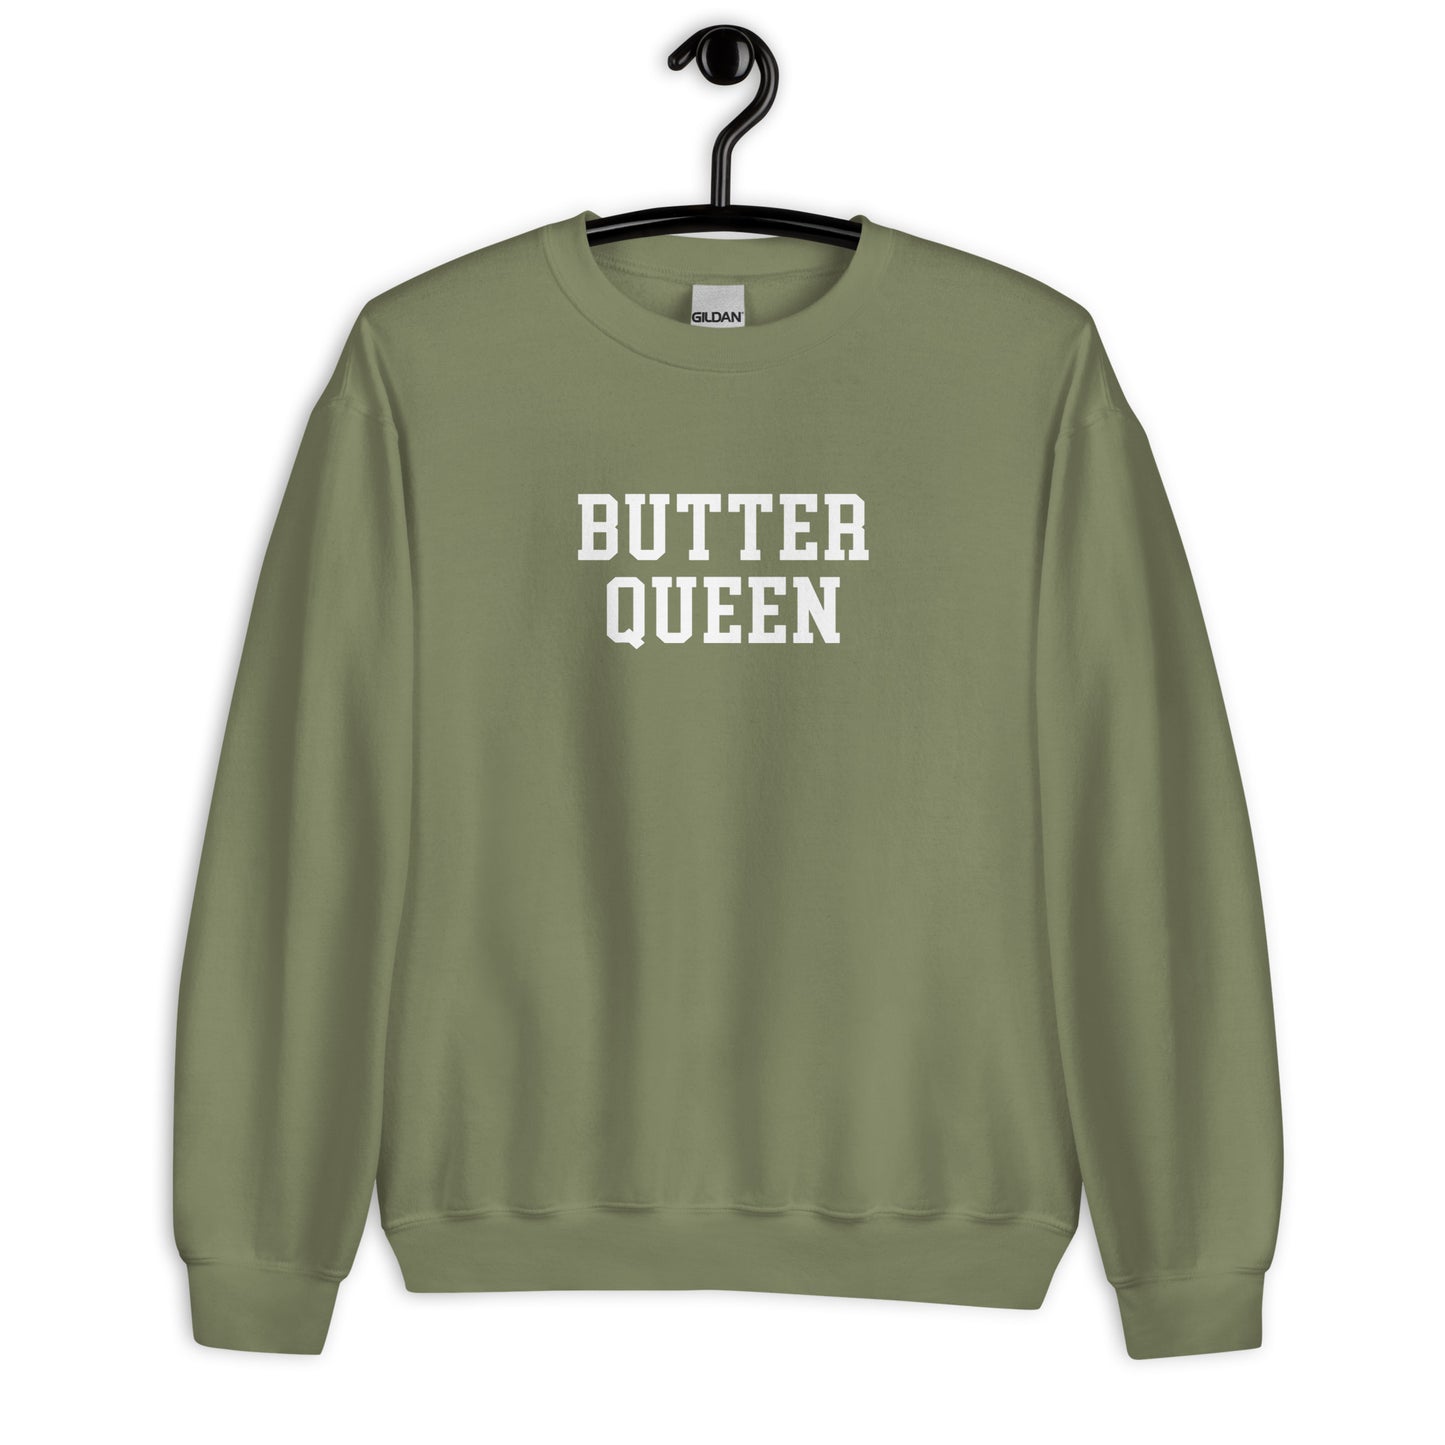 Butter Queen Sweatshirt - Straight Font